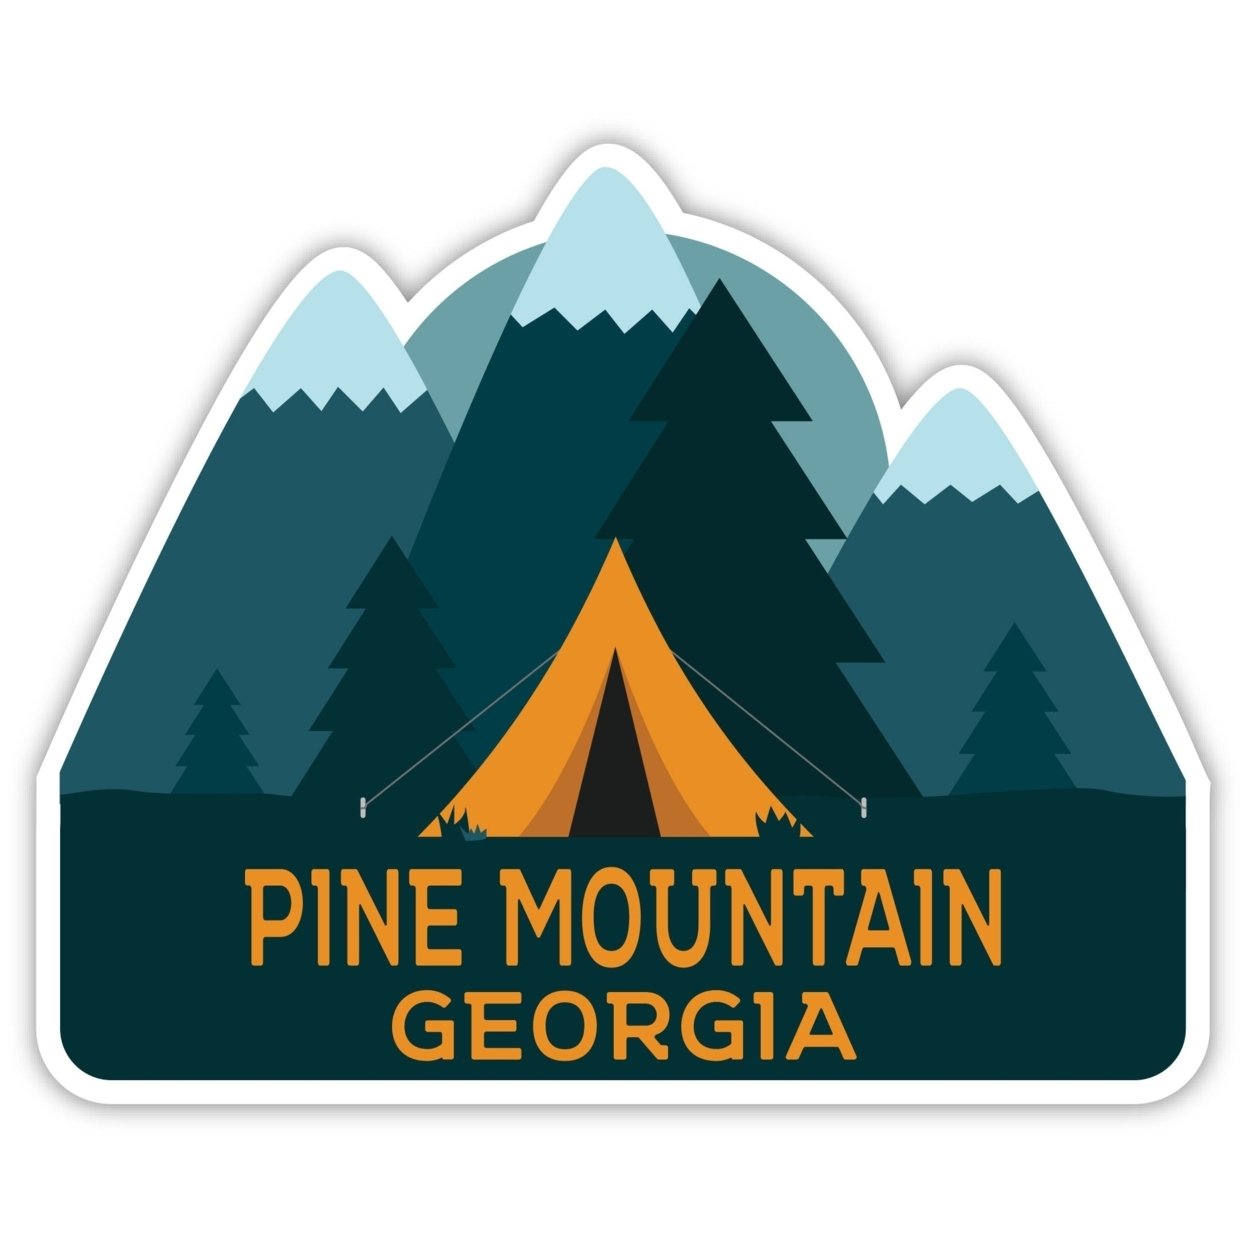 Pine Mountain Georgia Souvenir Decorative Stickers (Choose Theme And Size) - Single Unit, 4-Inch, Tent